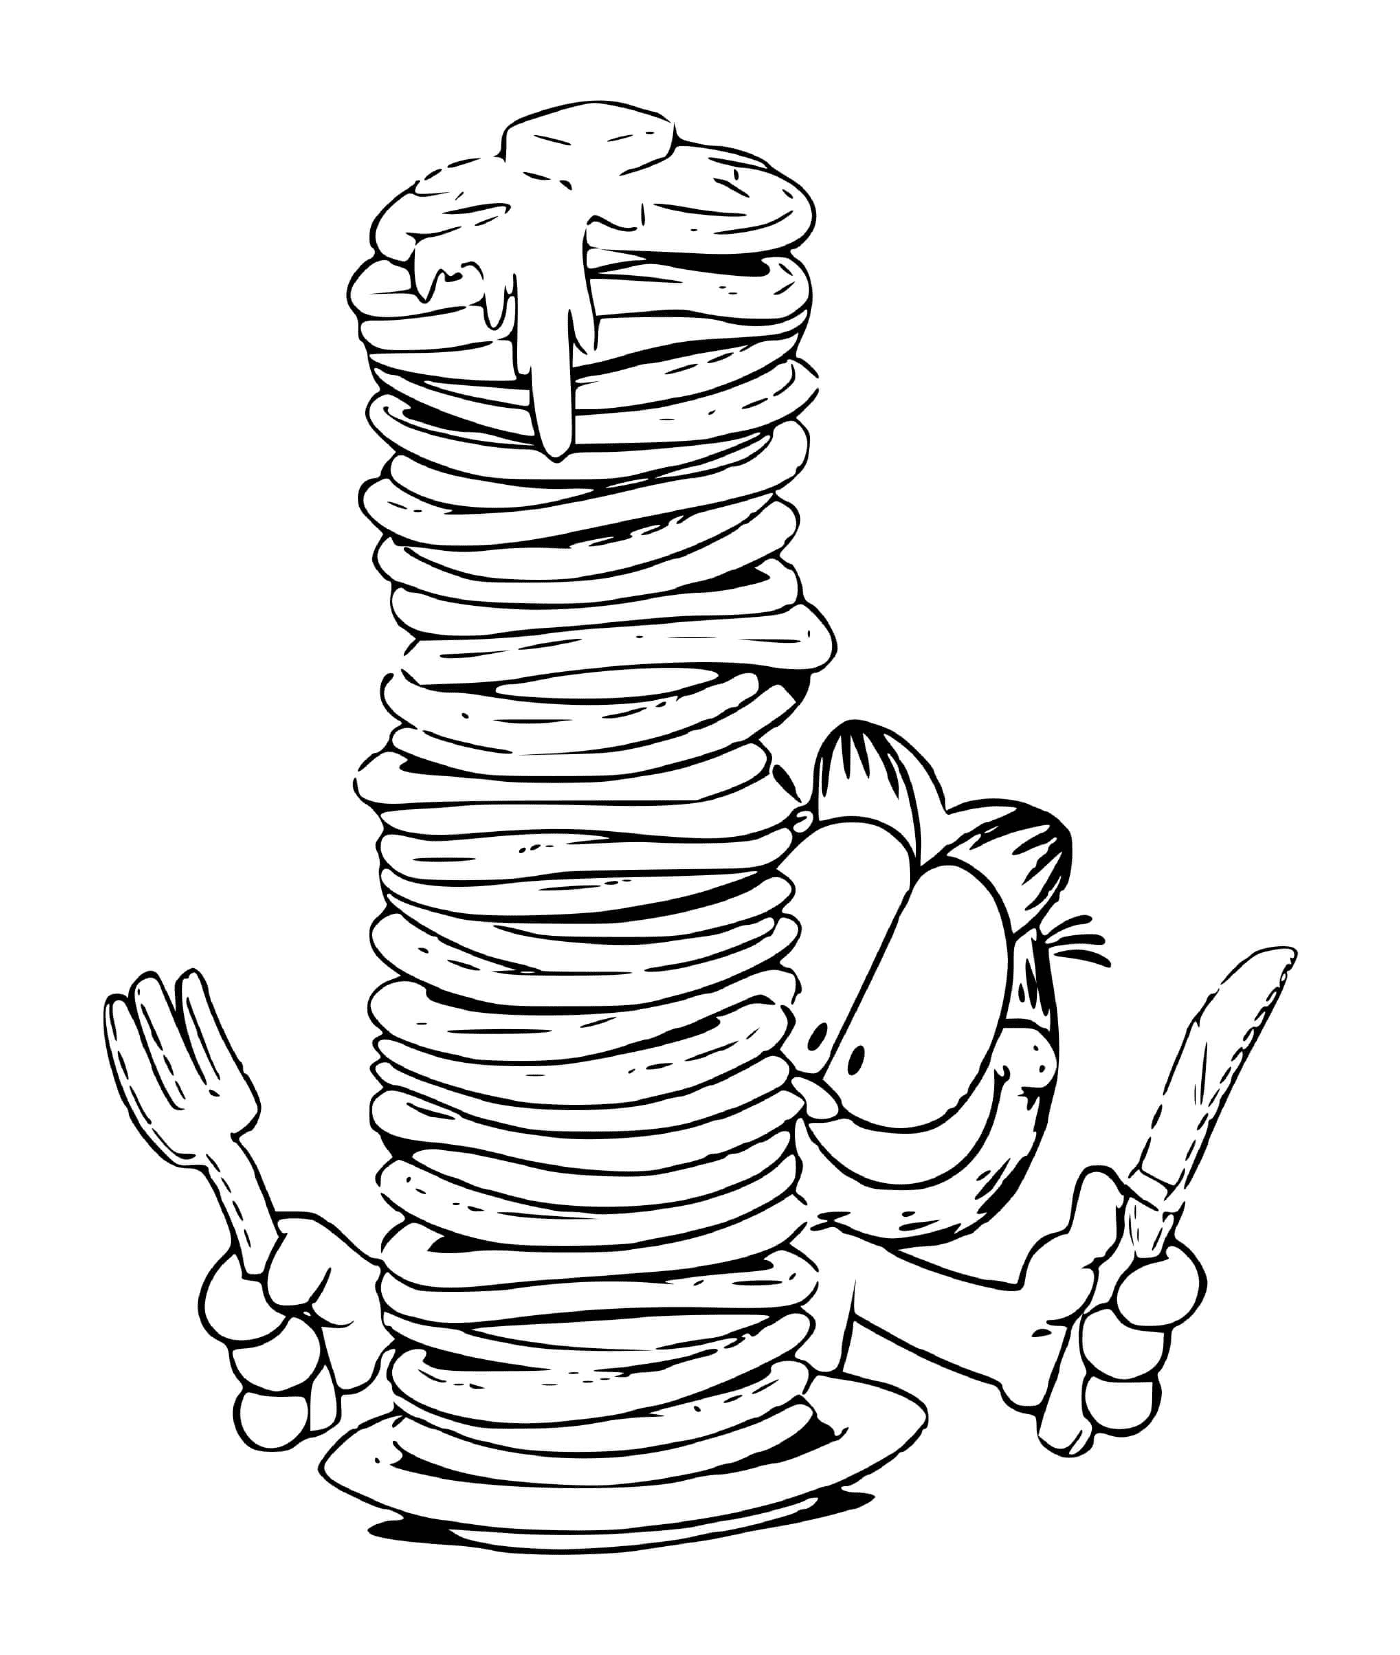  Garfield eats a pile of pancakes 